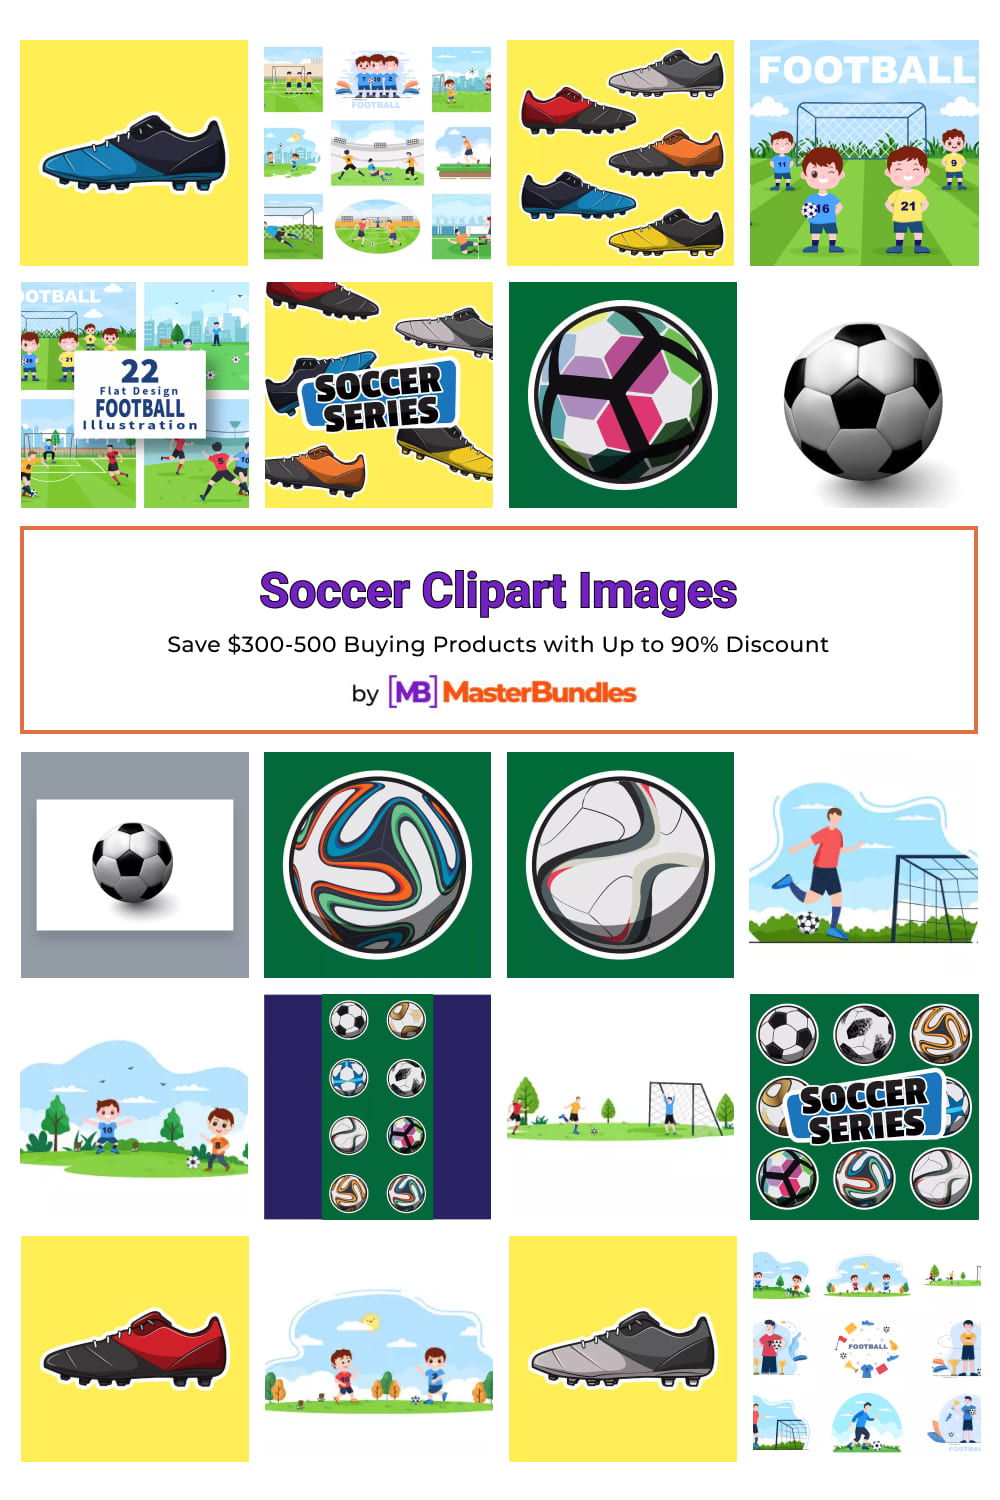 Soccer Clipart Images Pinterest image.